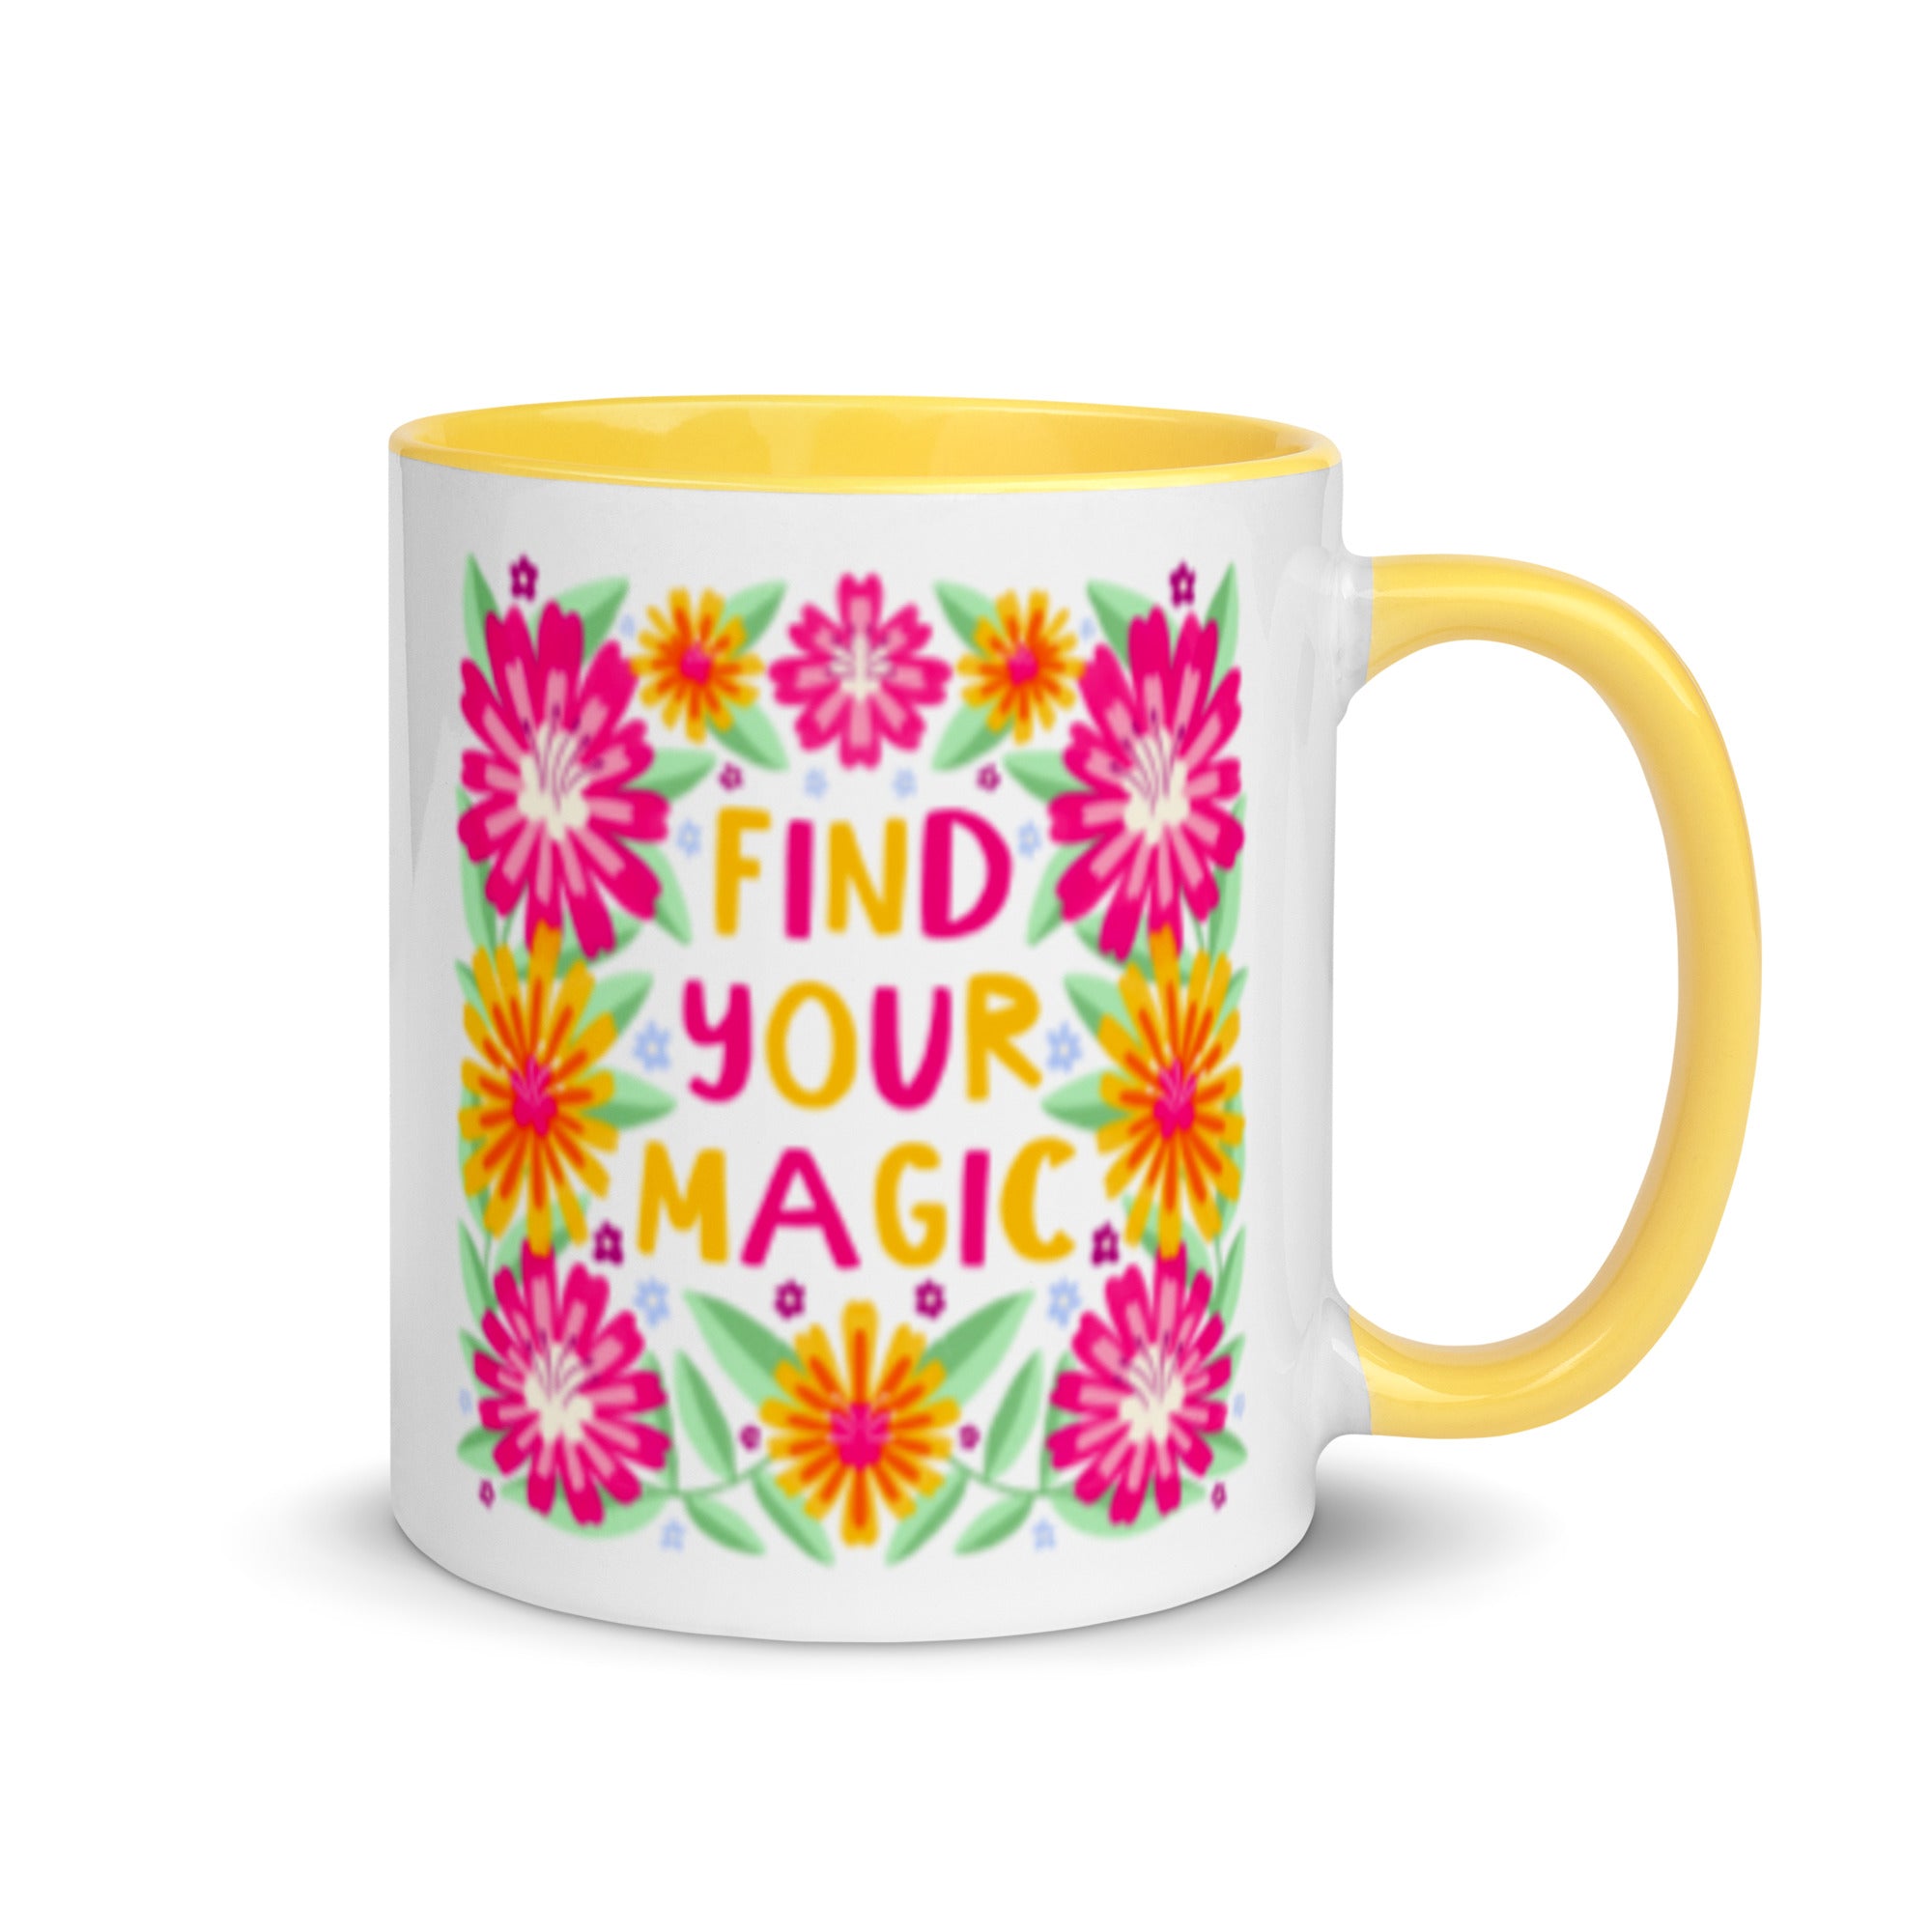 Find Your Magic Mug